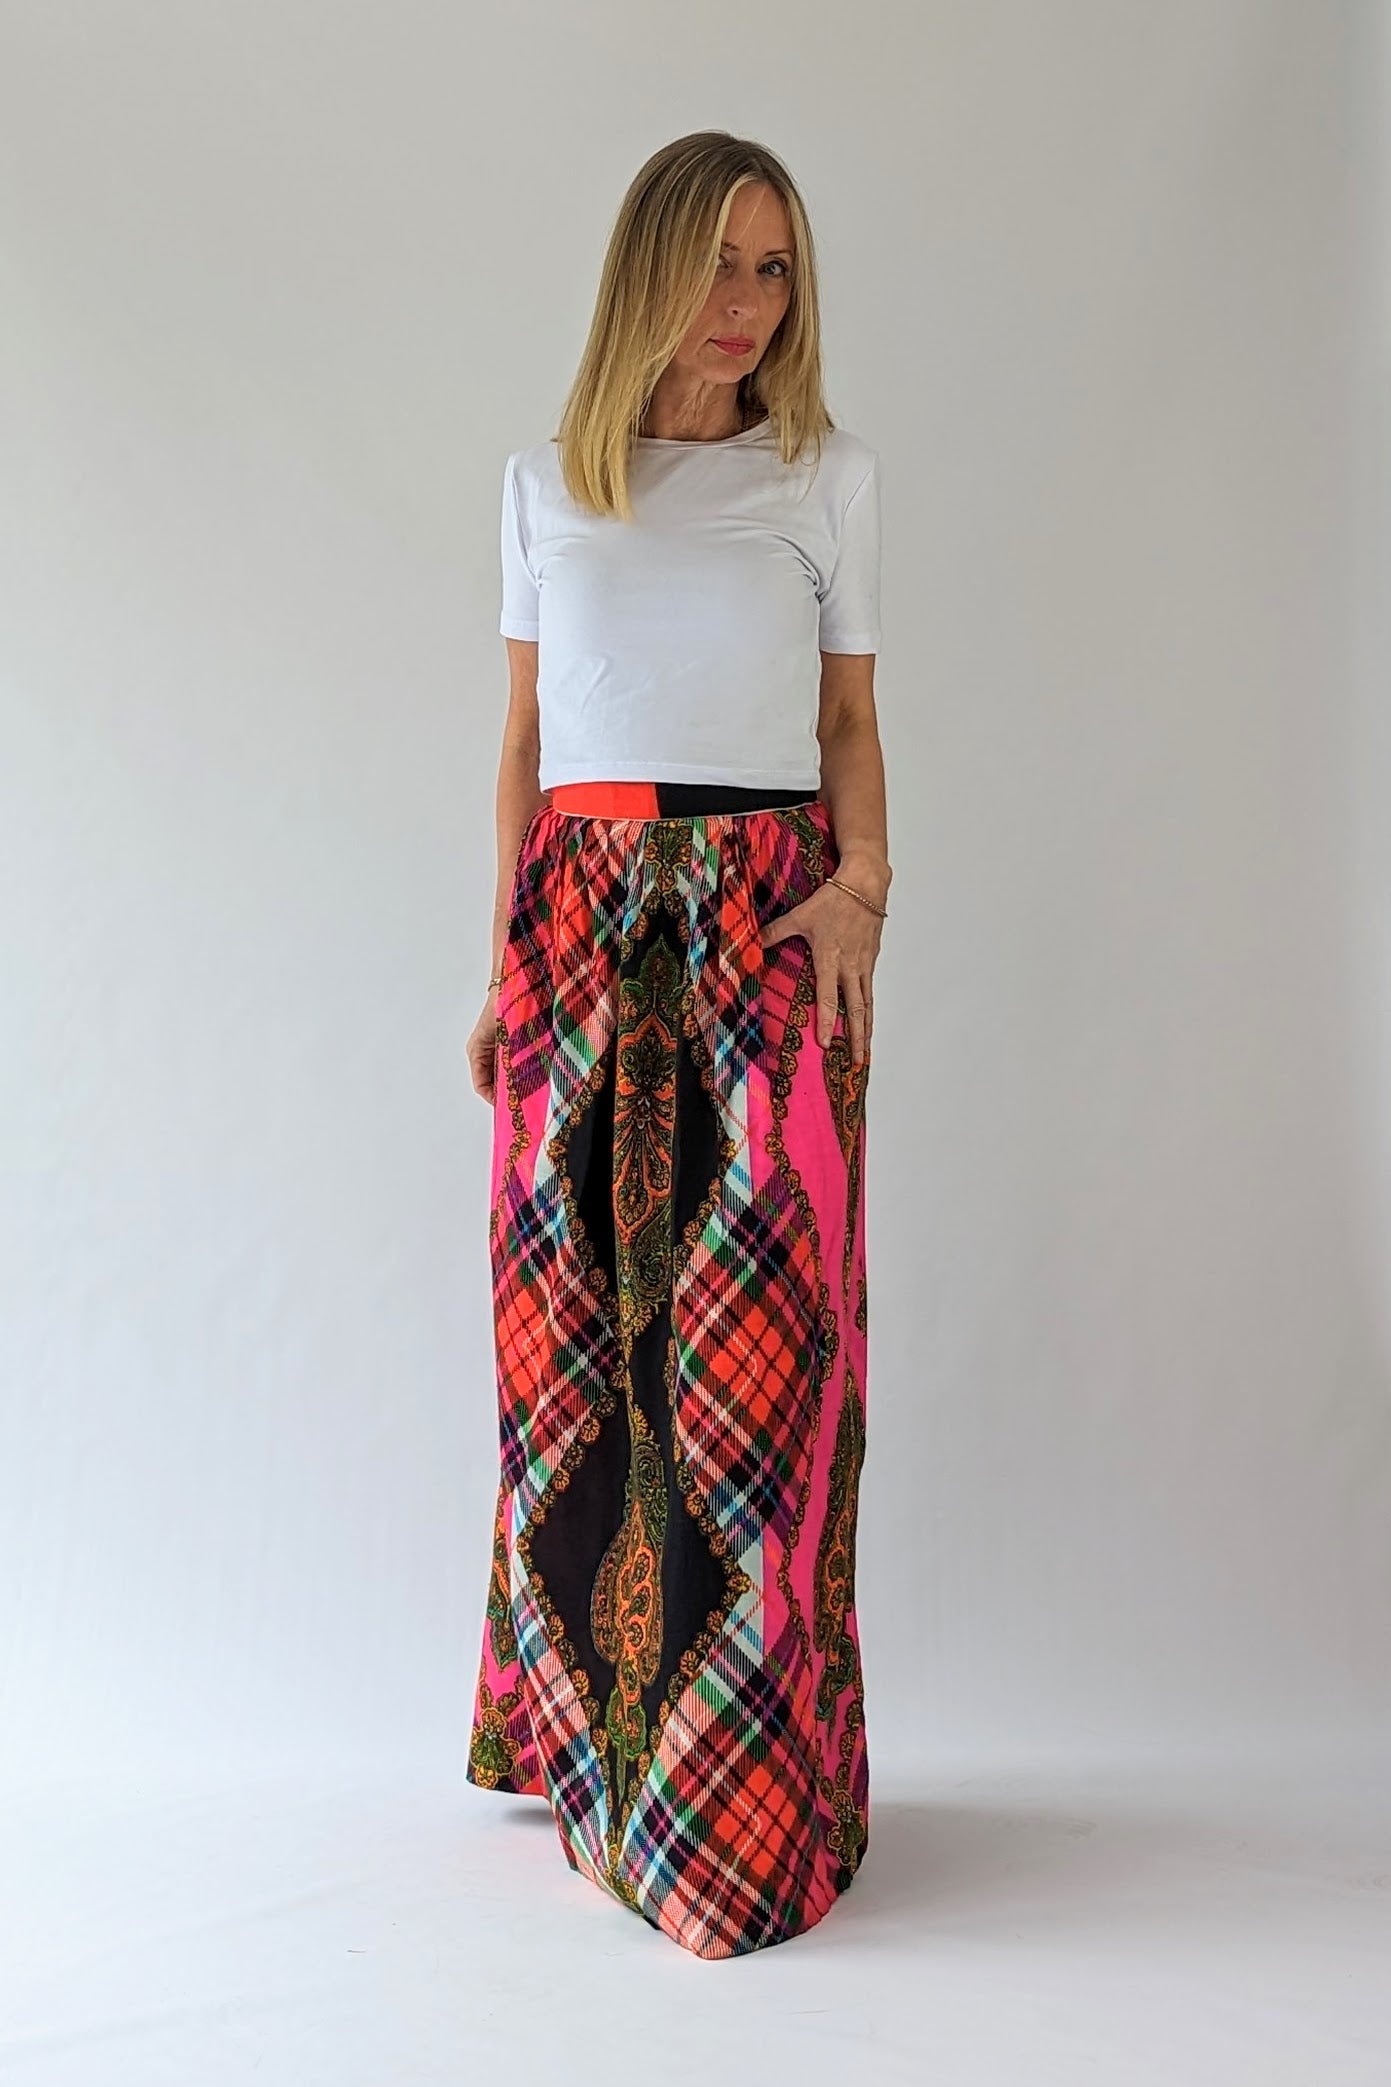 70s fabric vintage skirt